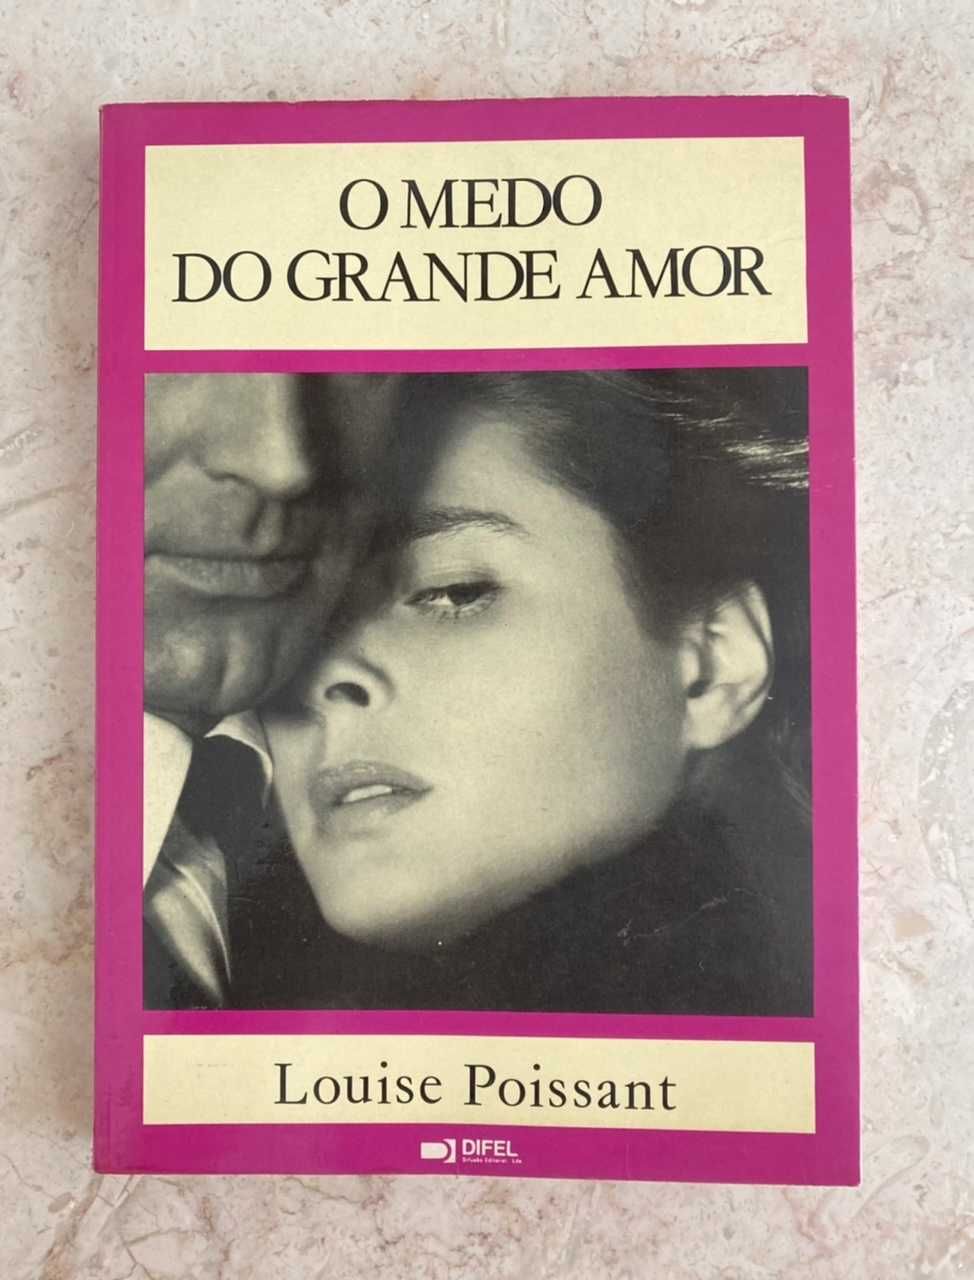 Livro "O Medo do Grande Amor" de Louise Poissant